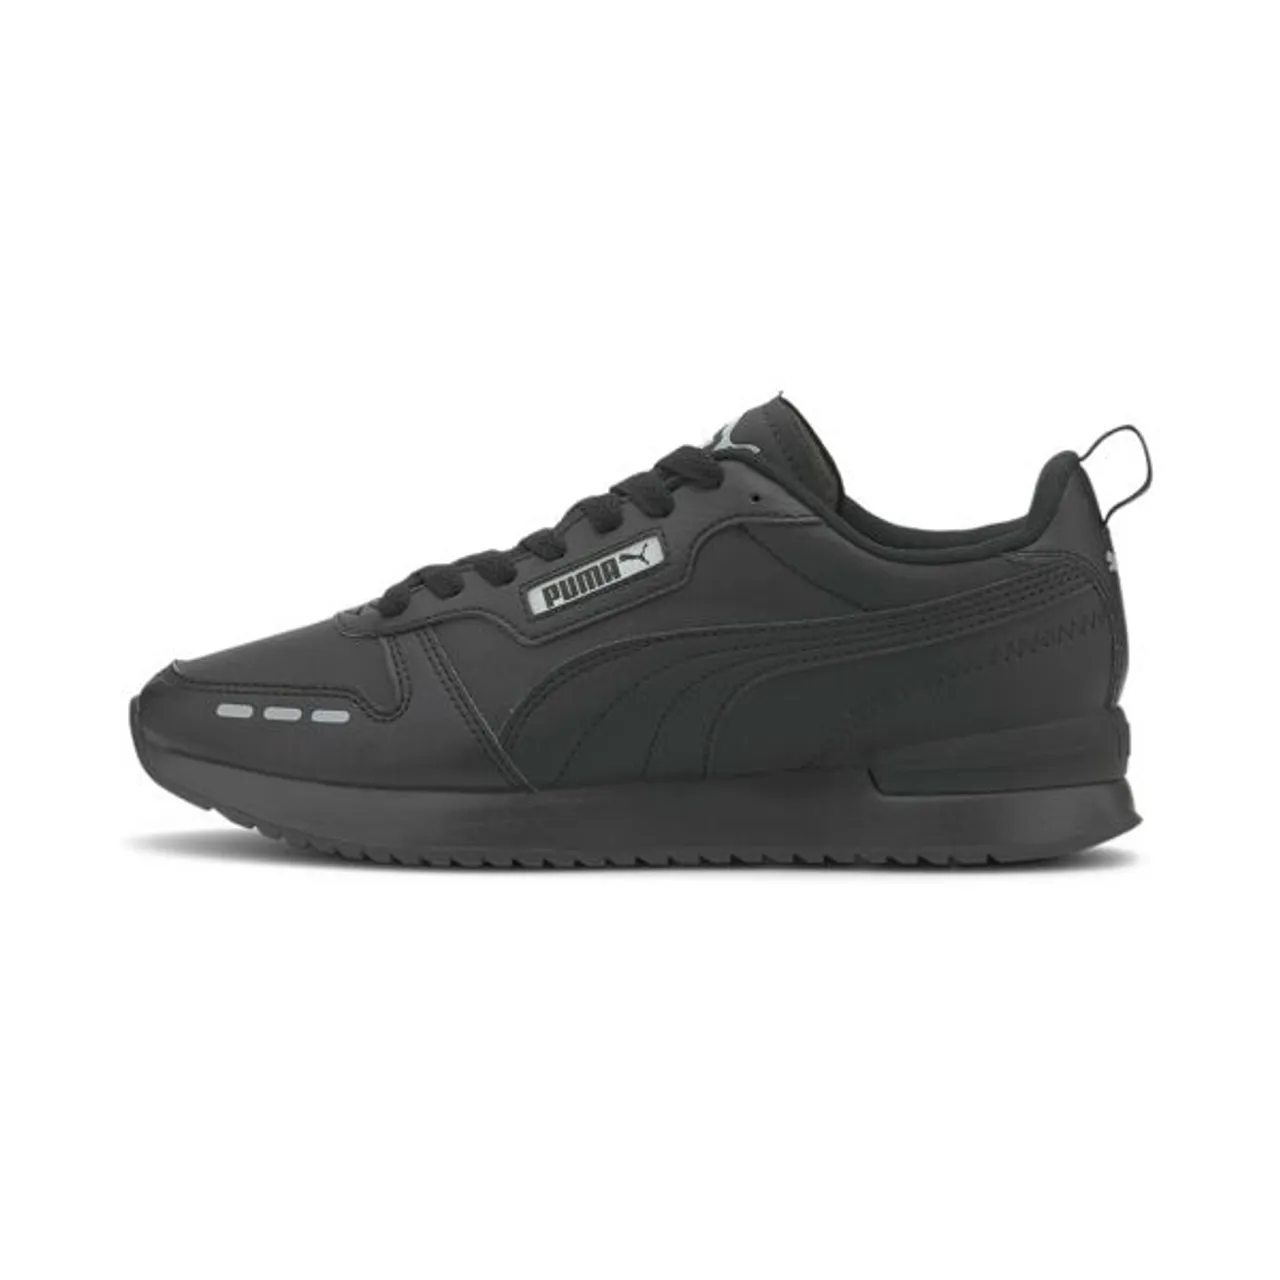 Sneaker PUMA "R78 Erwachsene" Gr. 37, schwarz (black) Schuhe Puma